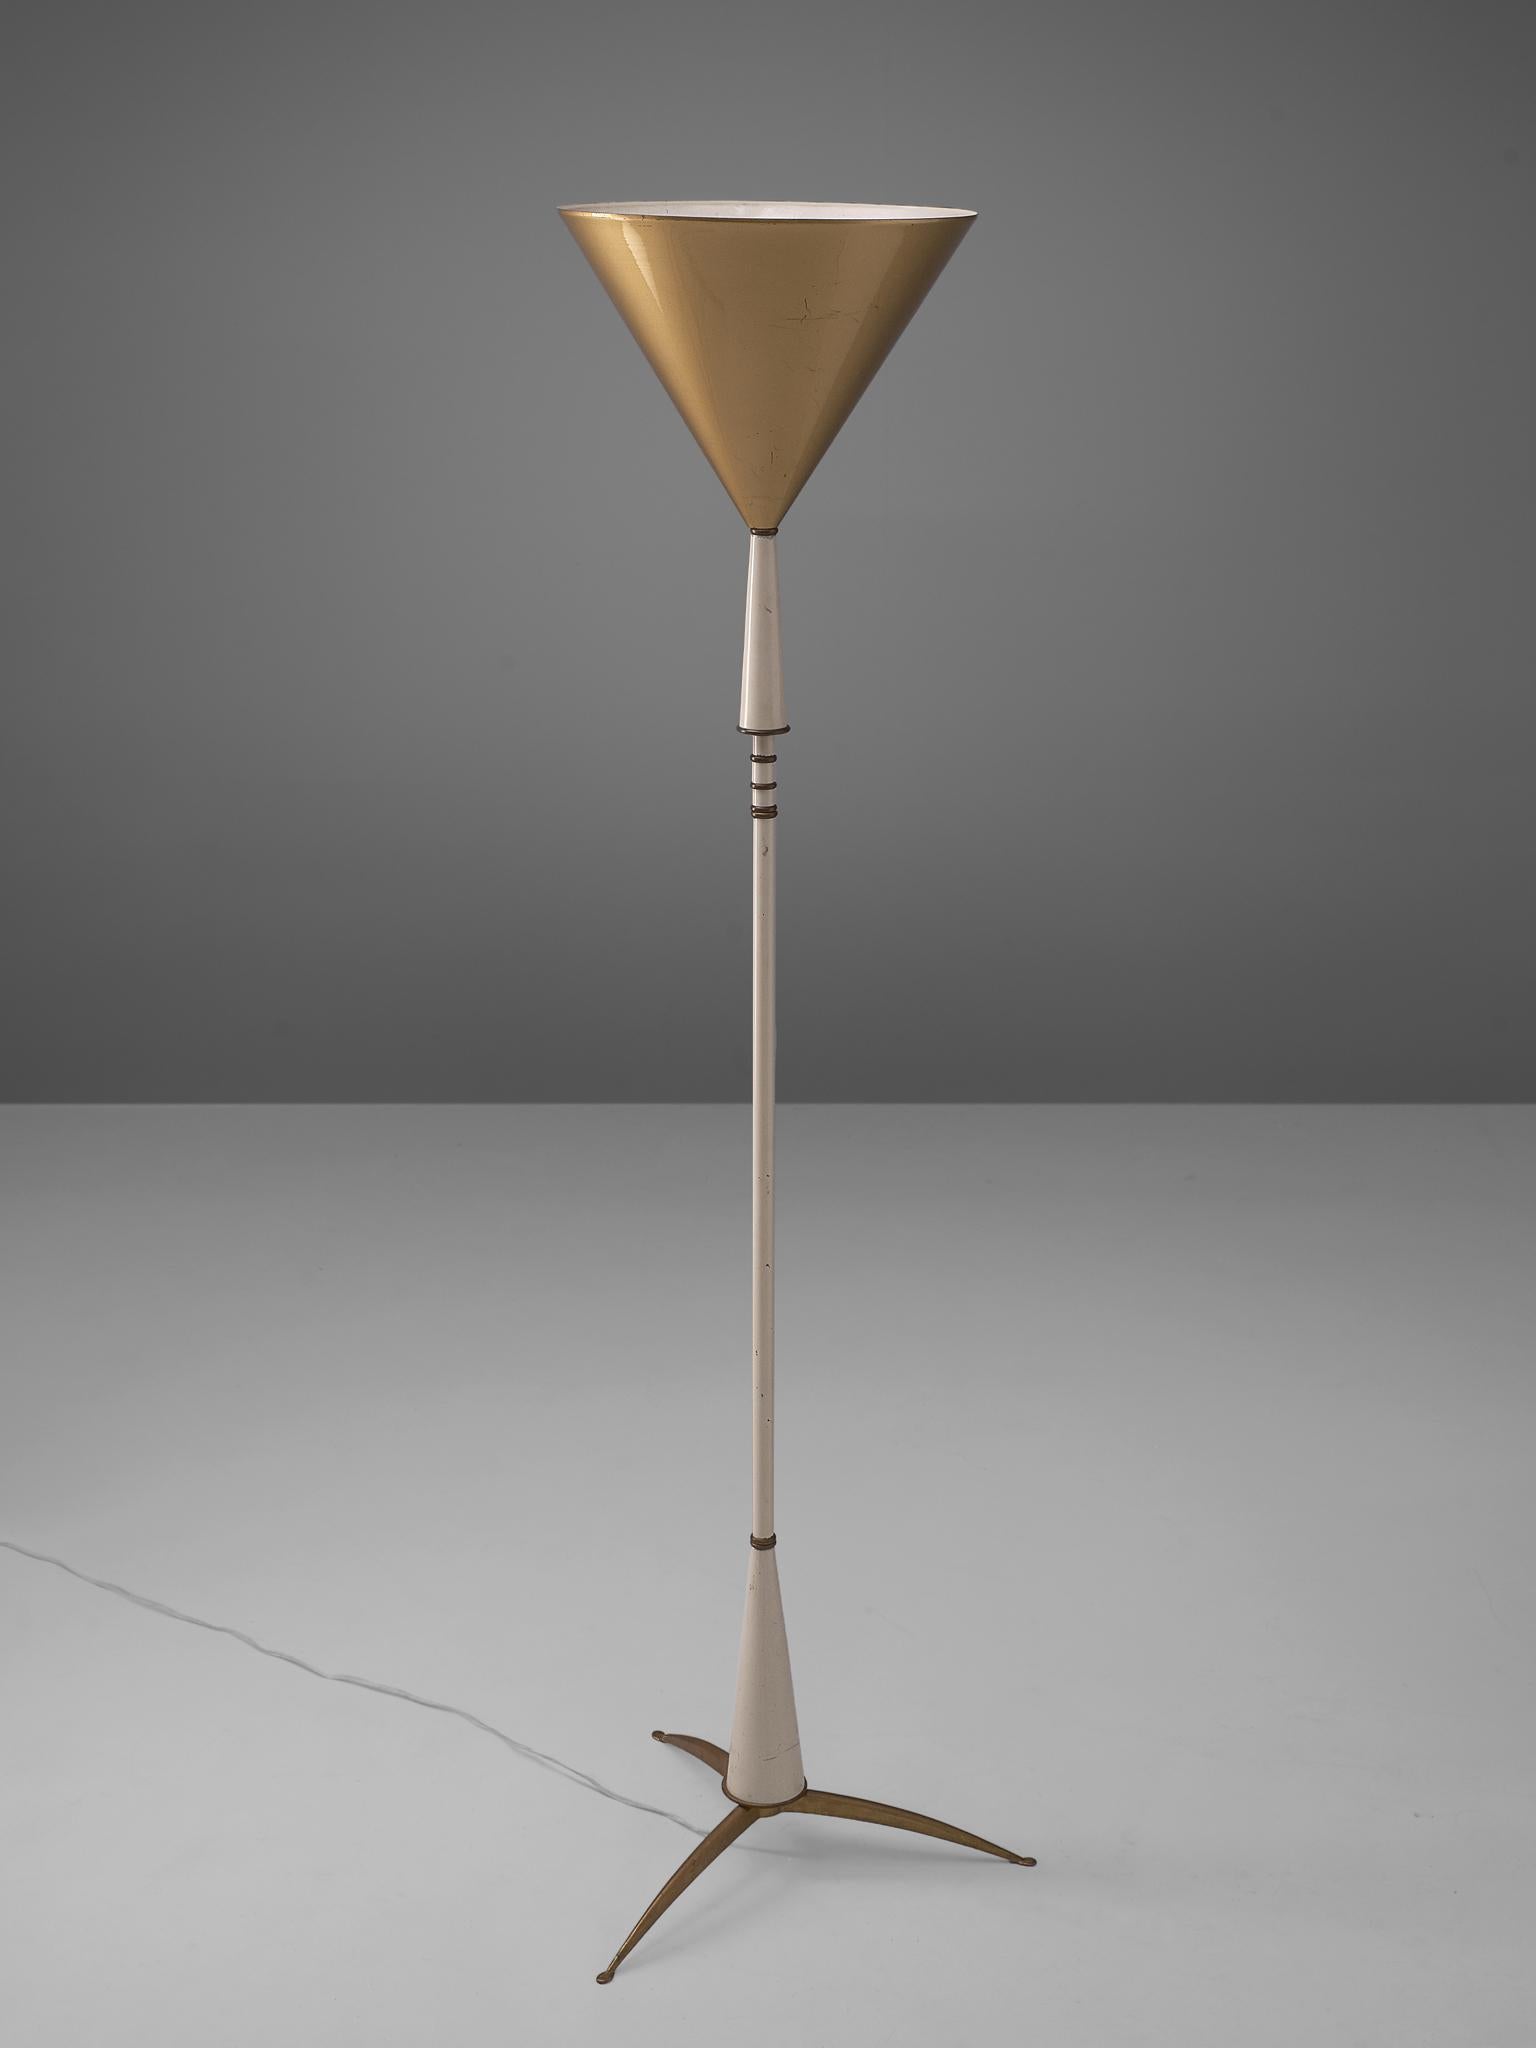 Metal Italian Floor Lamp with Tripod Foot